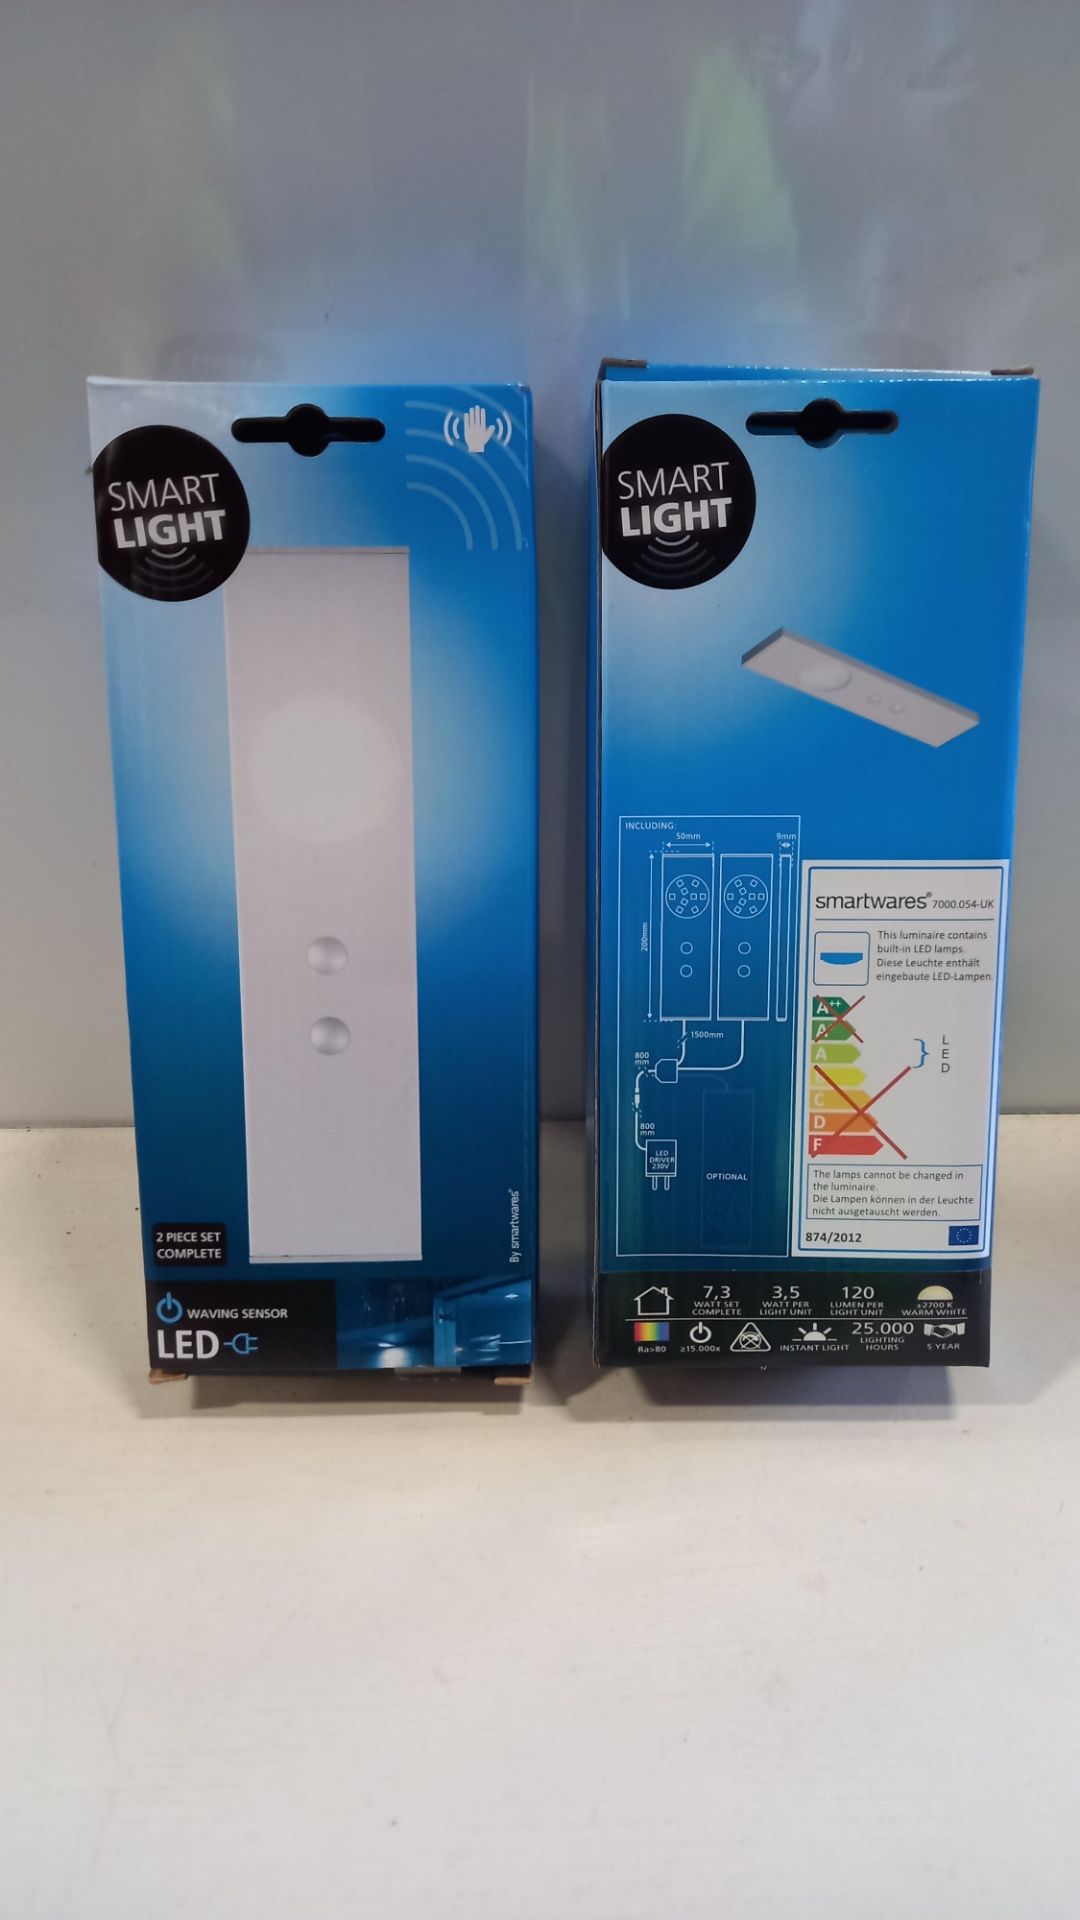 64 X BRAND NEW SMART LIGHT LED ( WAVING SENSOR ) ( SAP NO 10.900.64) CABINET LIGHTS